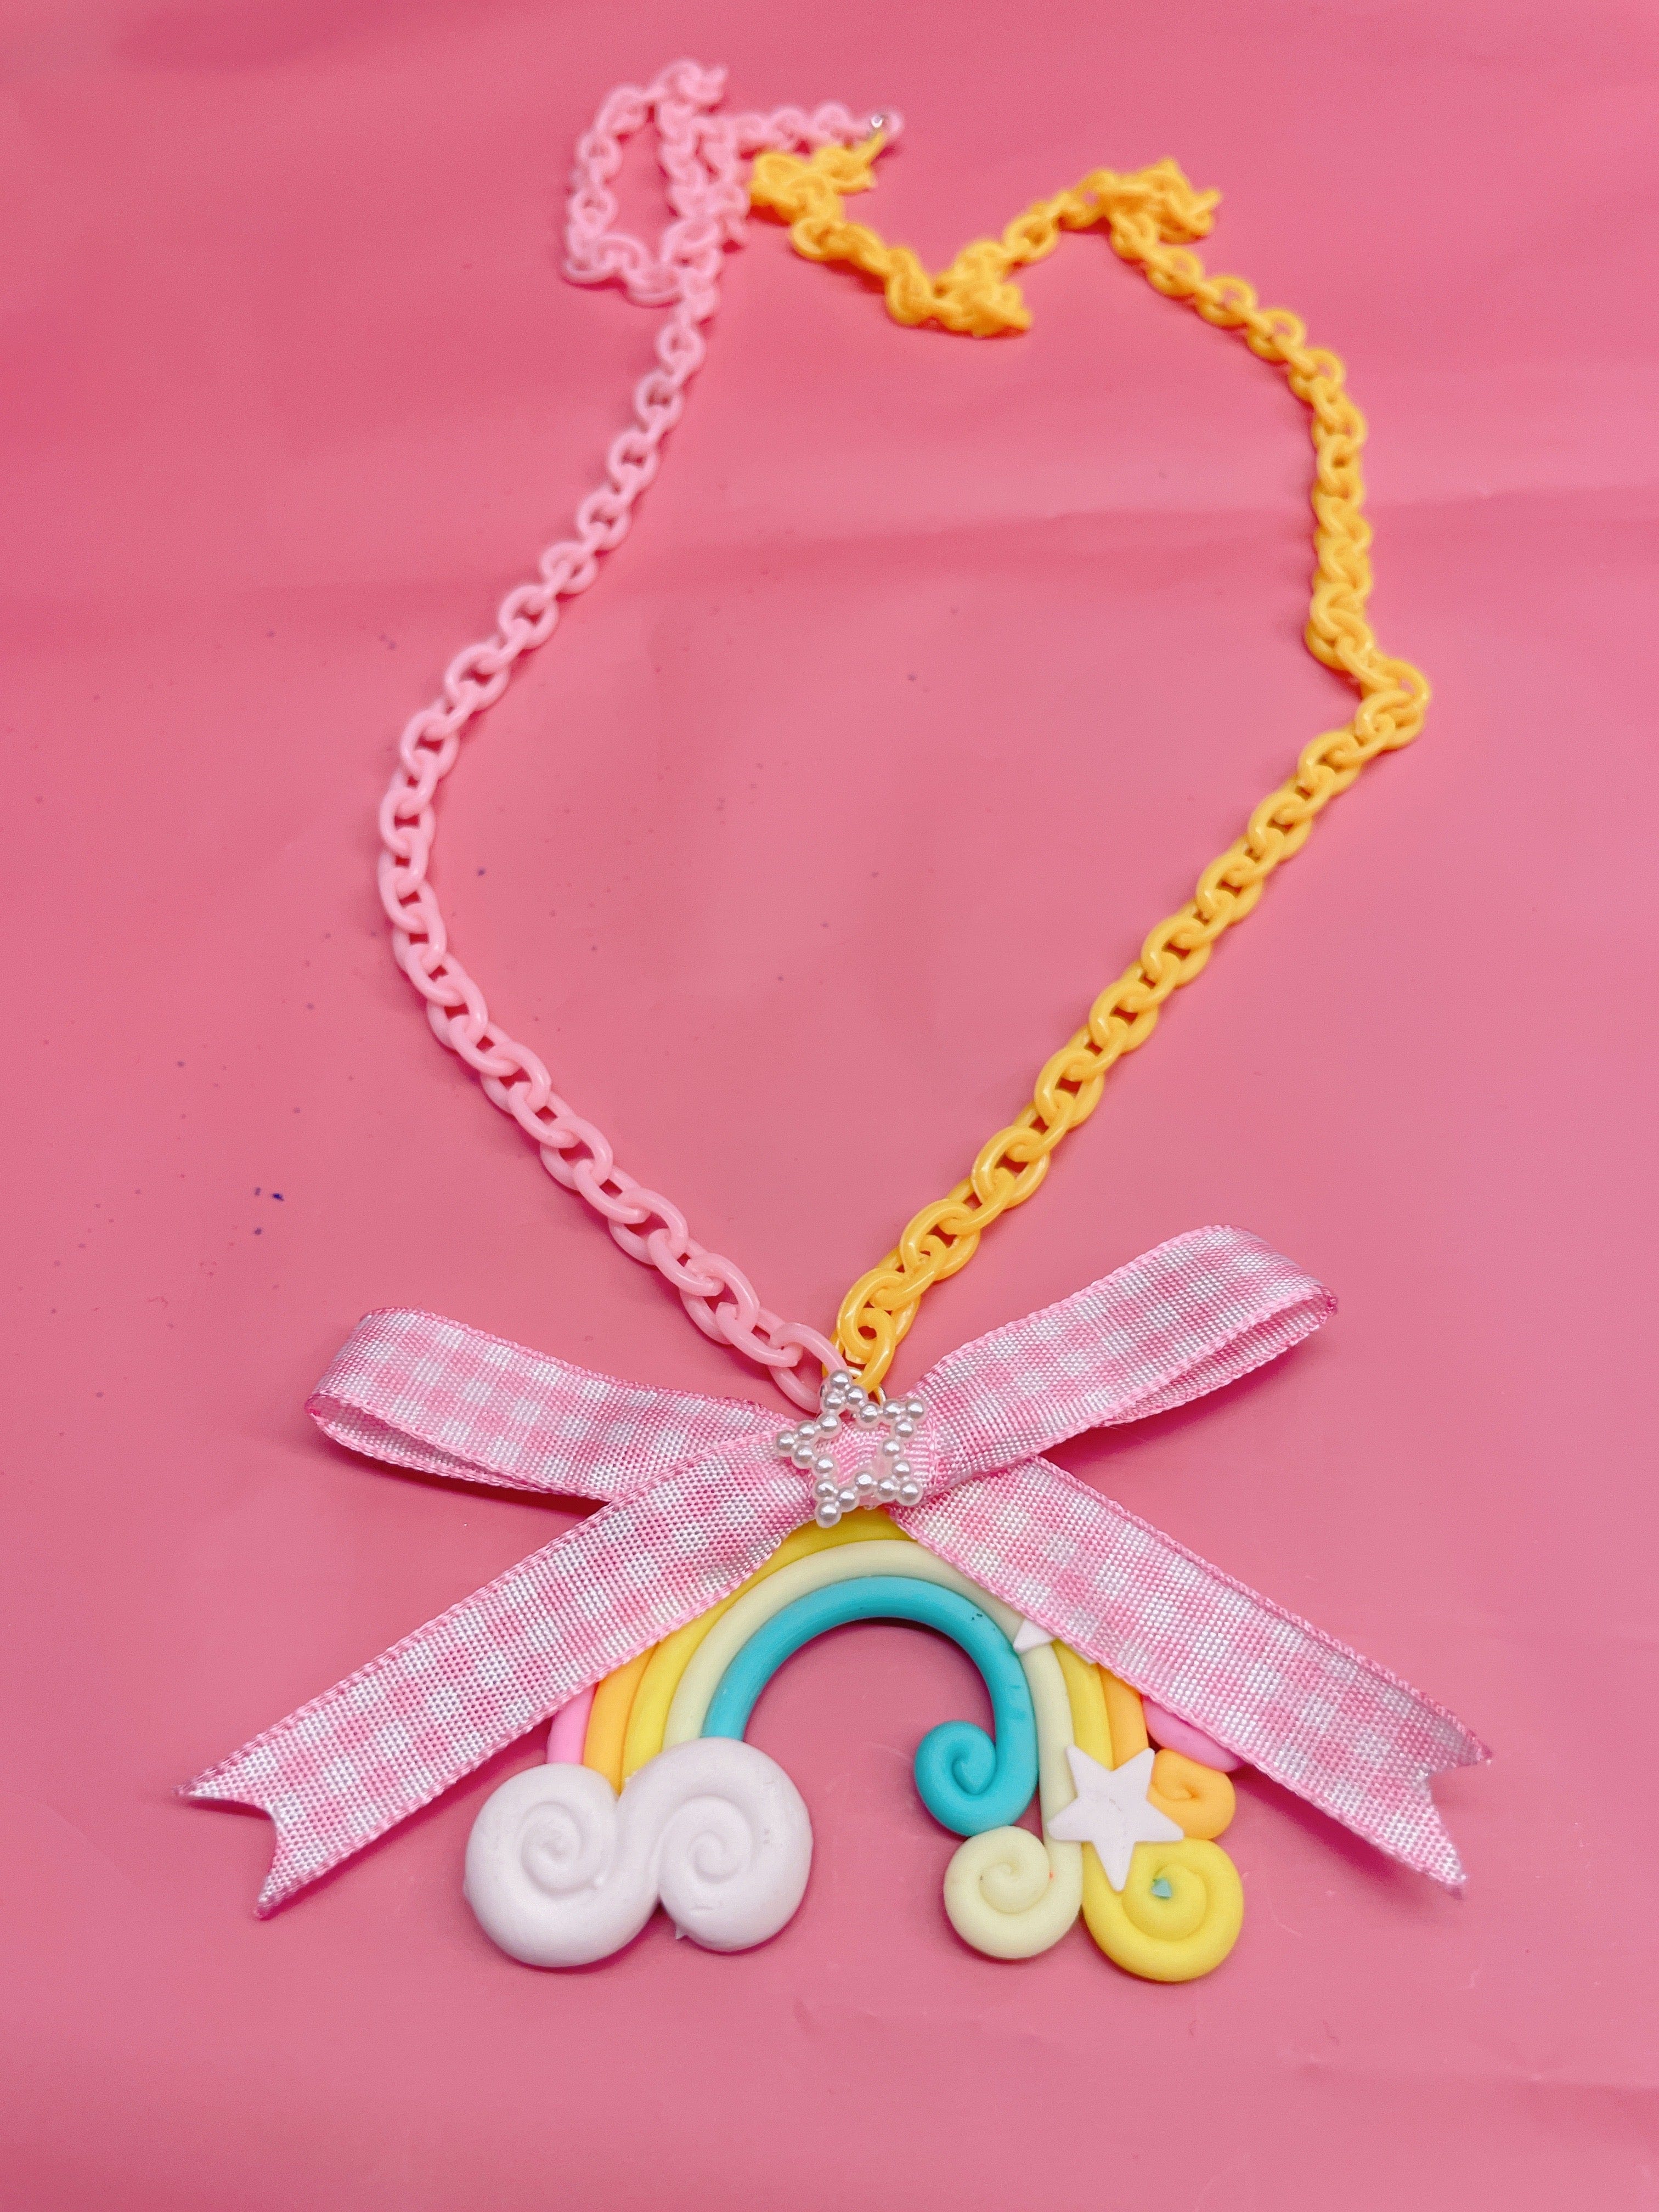 Taobao Rainbow Ribbon Necklace Kawaii Gifts 09446358